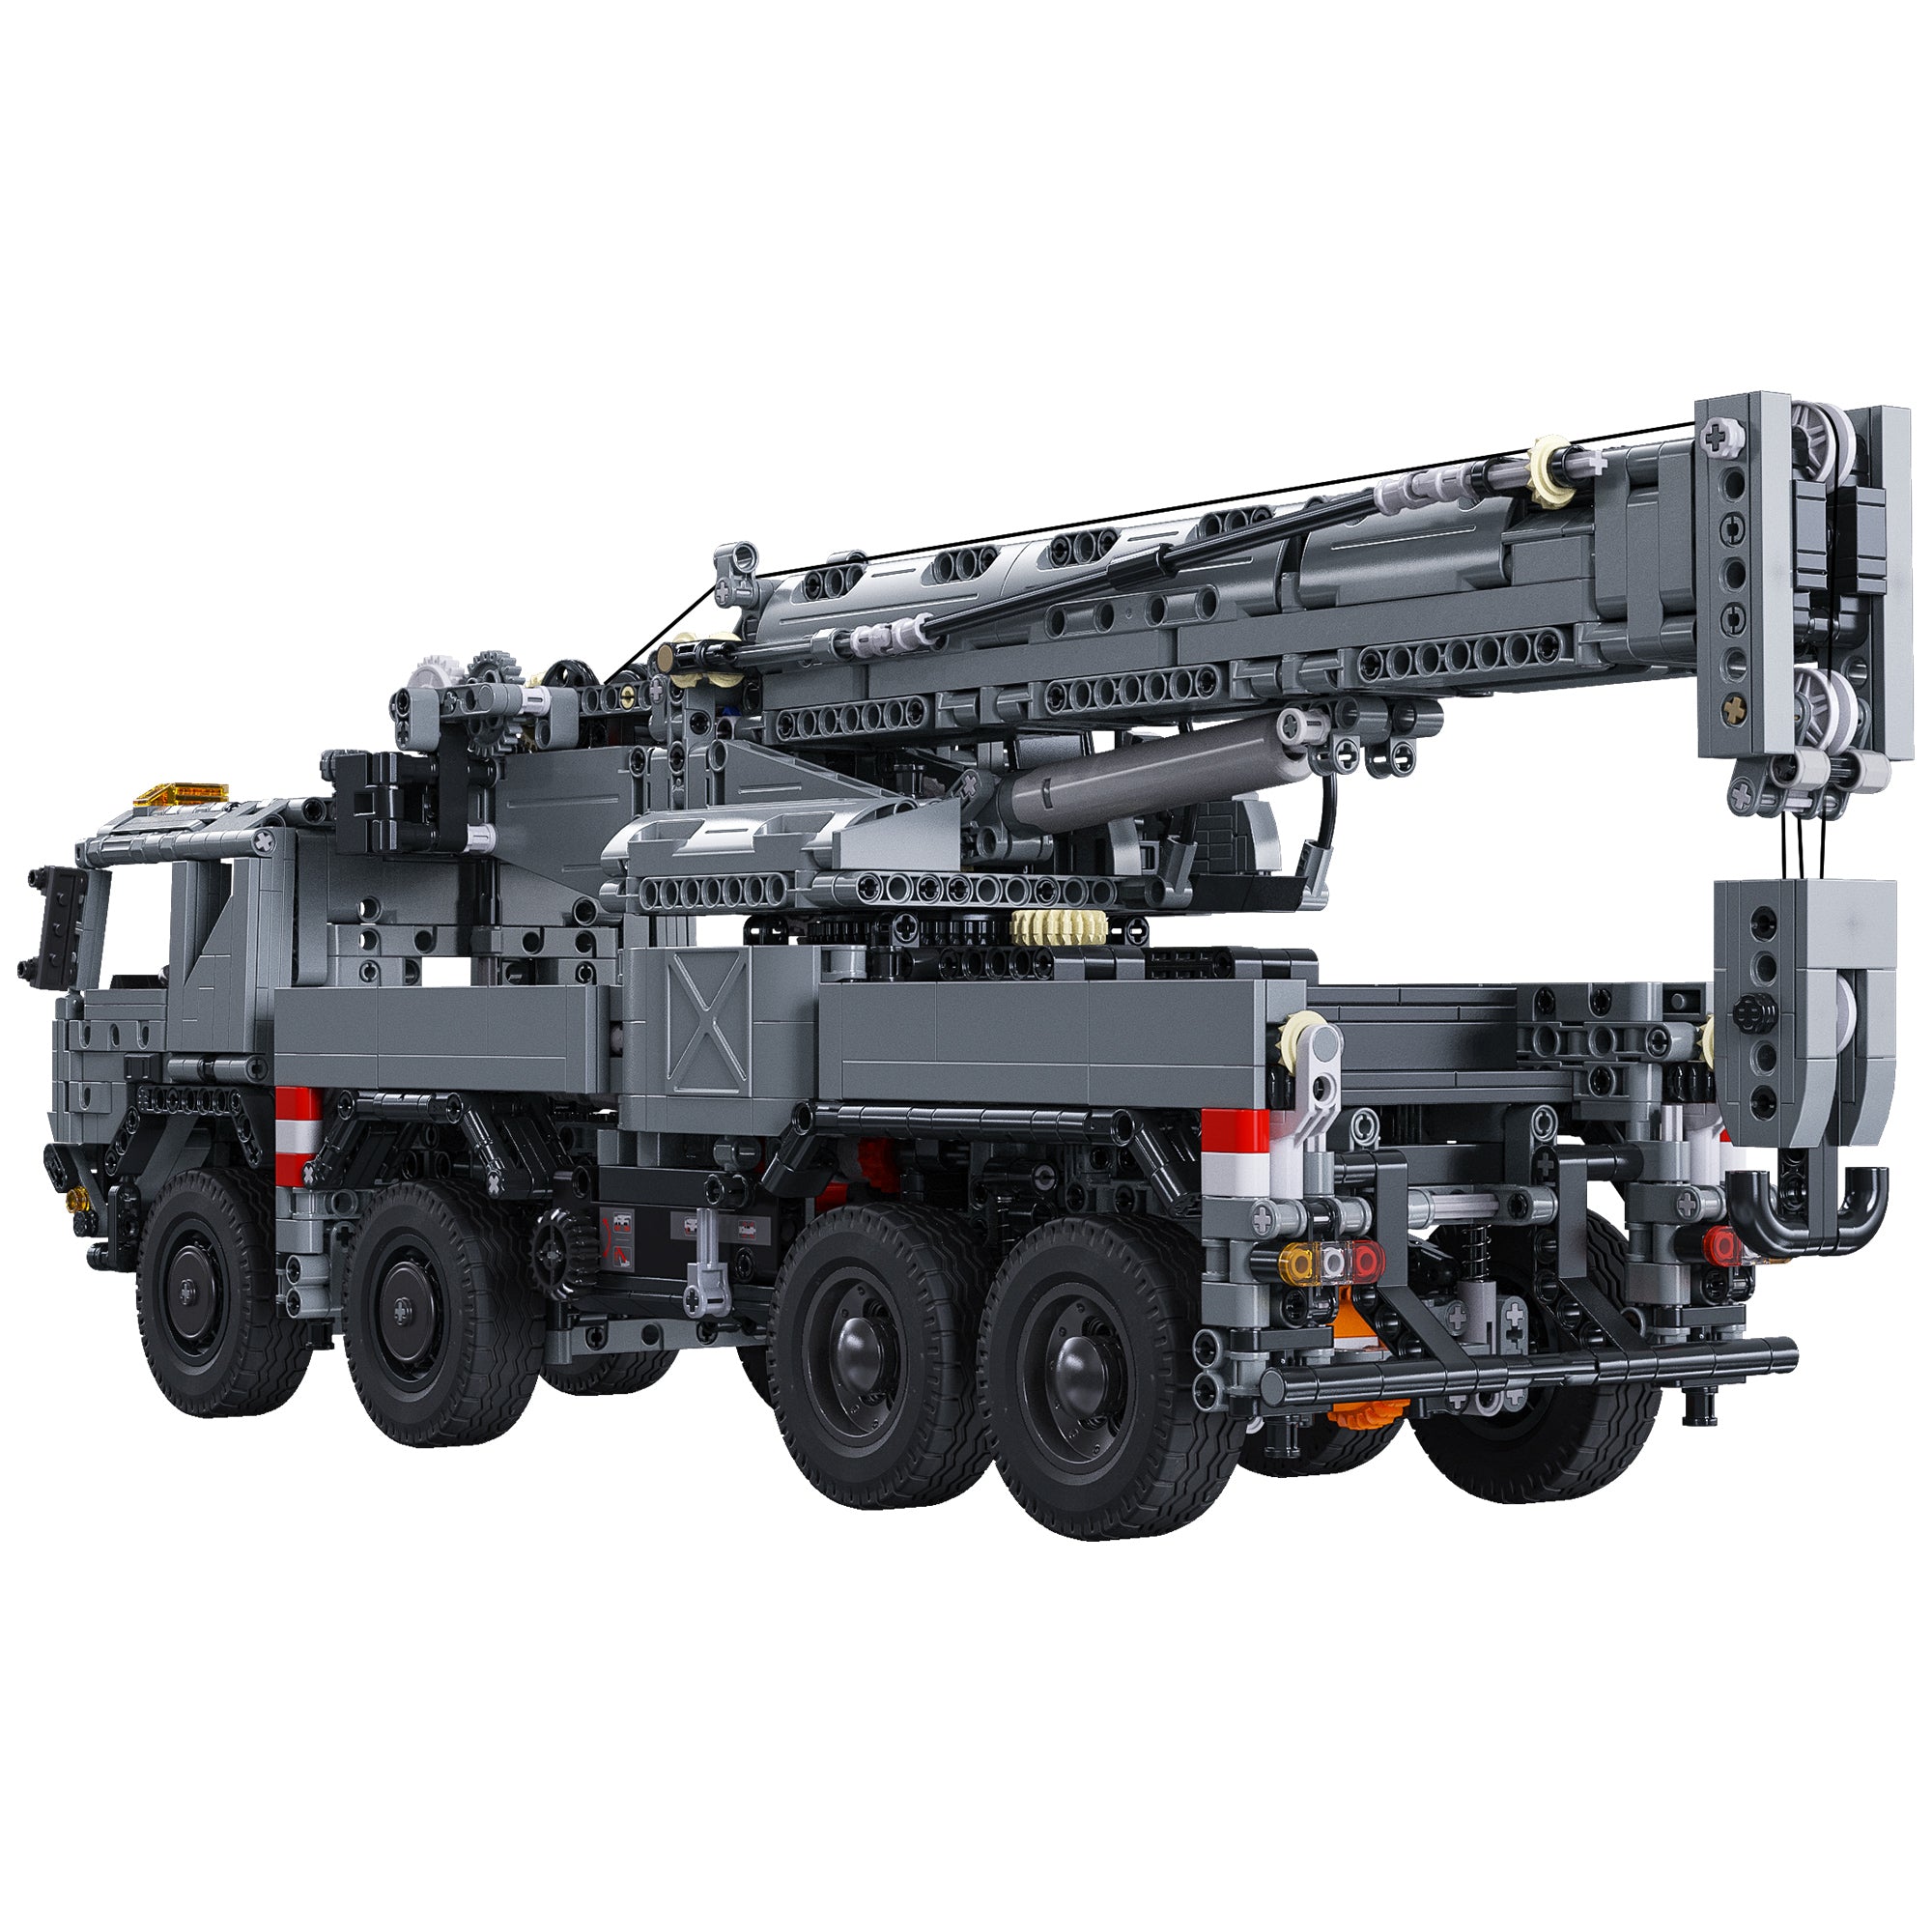 CaDA Military Crane Truck C61507W